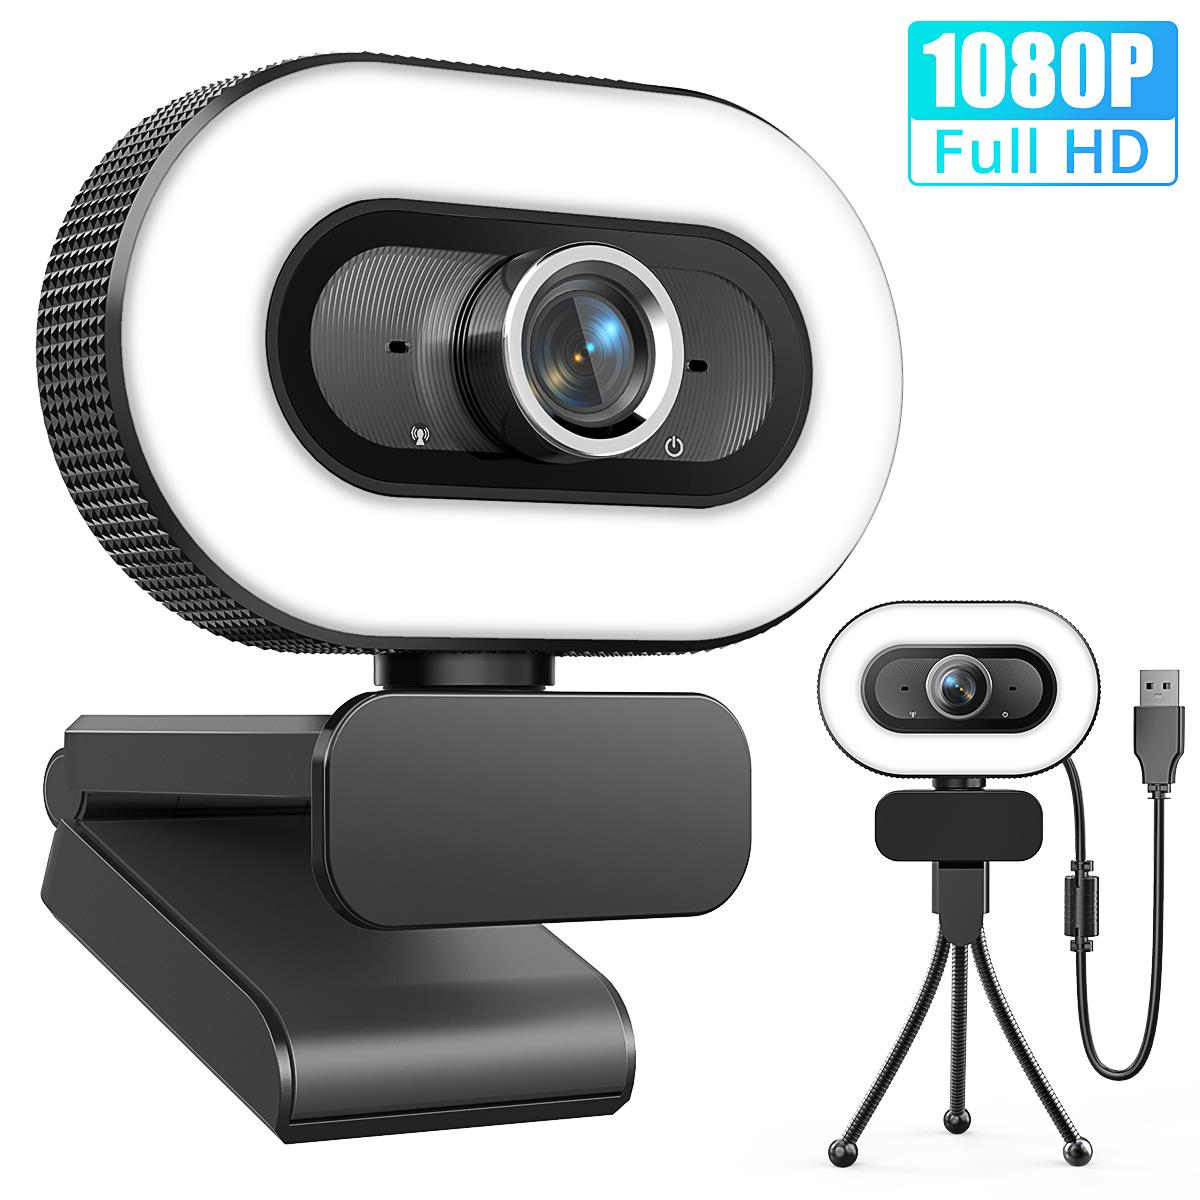 1080P Webcam with Microphone for Desktop, Streaming Webcam